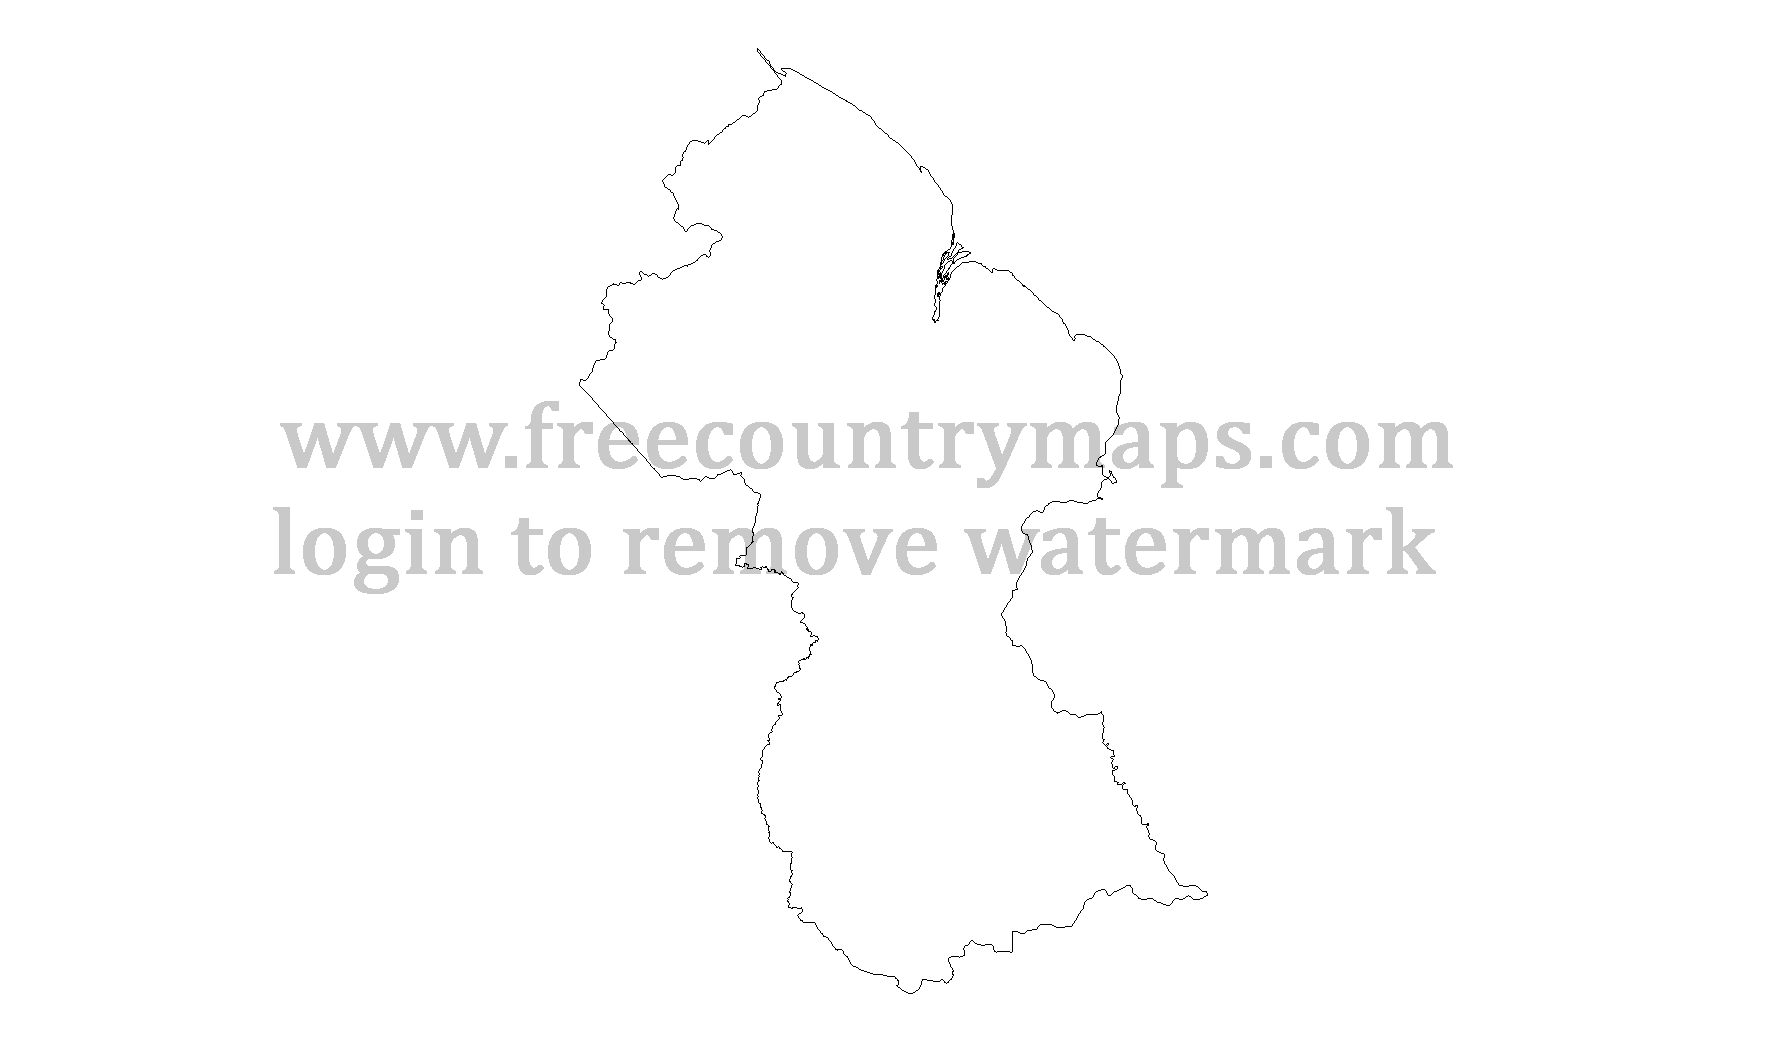 Outline Map of Guyana